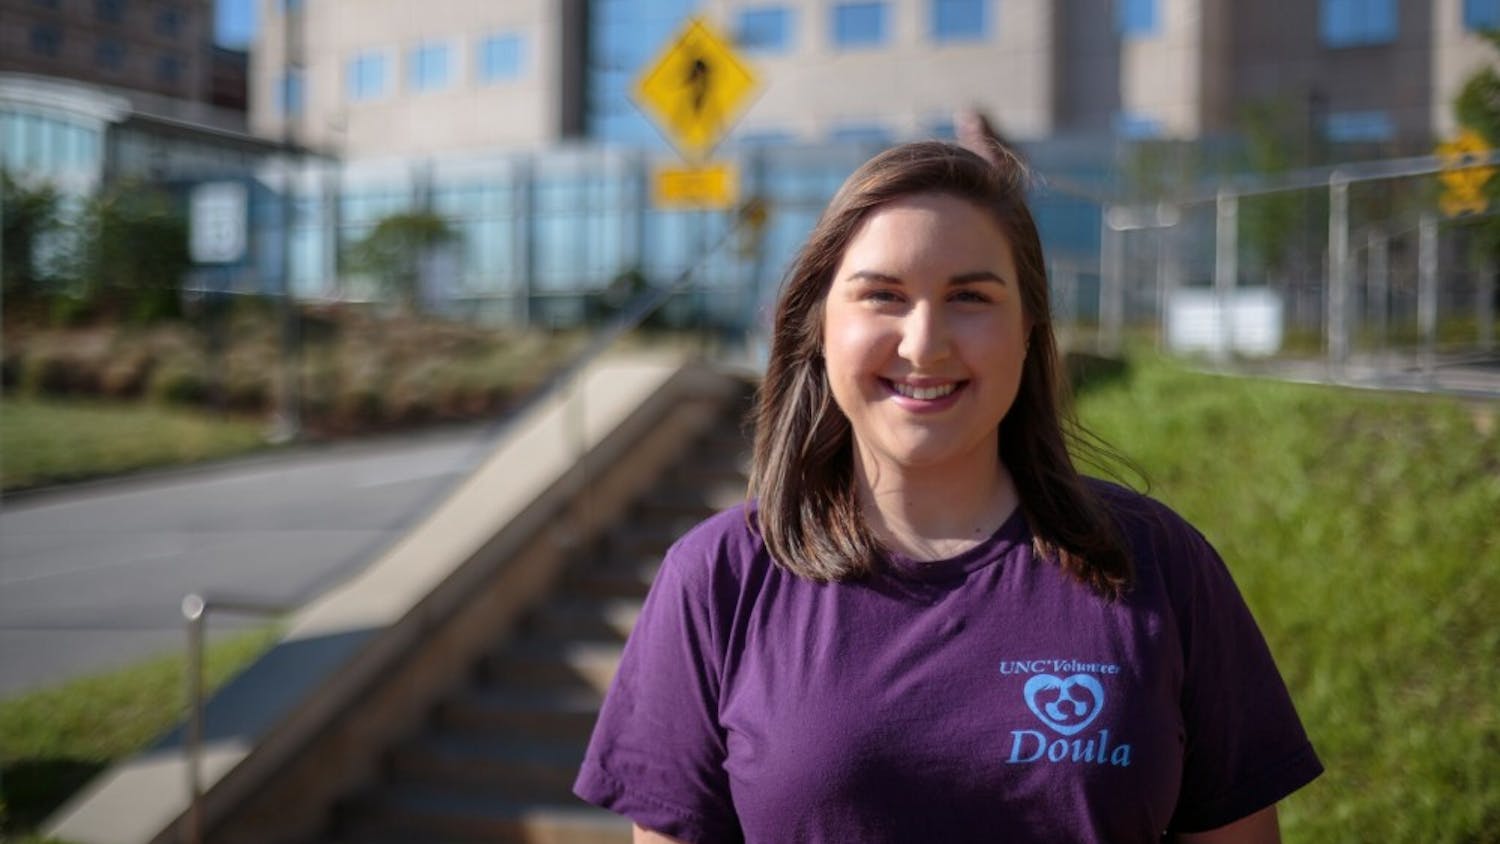 Senior Psychology major Leah Daniel volunteers as a Doula at the UNC Hospitals.